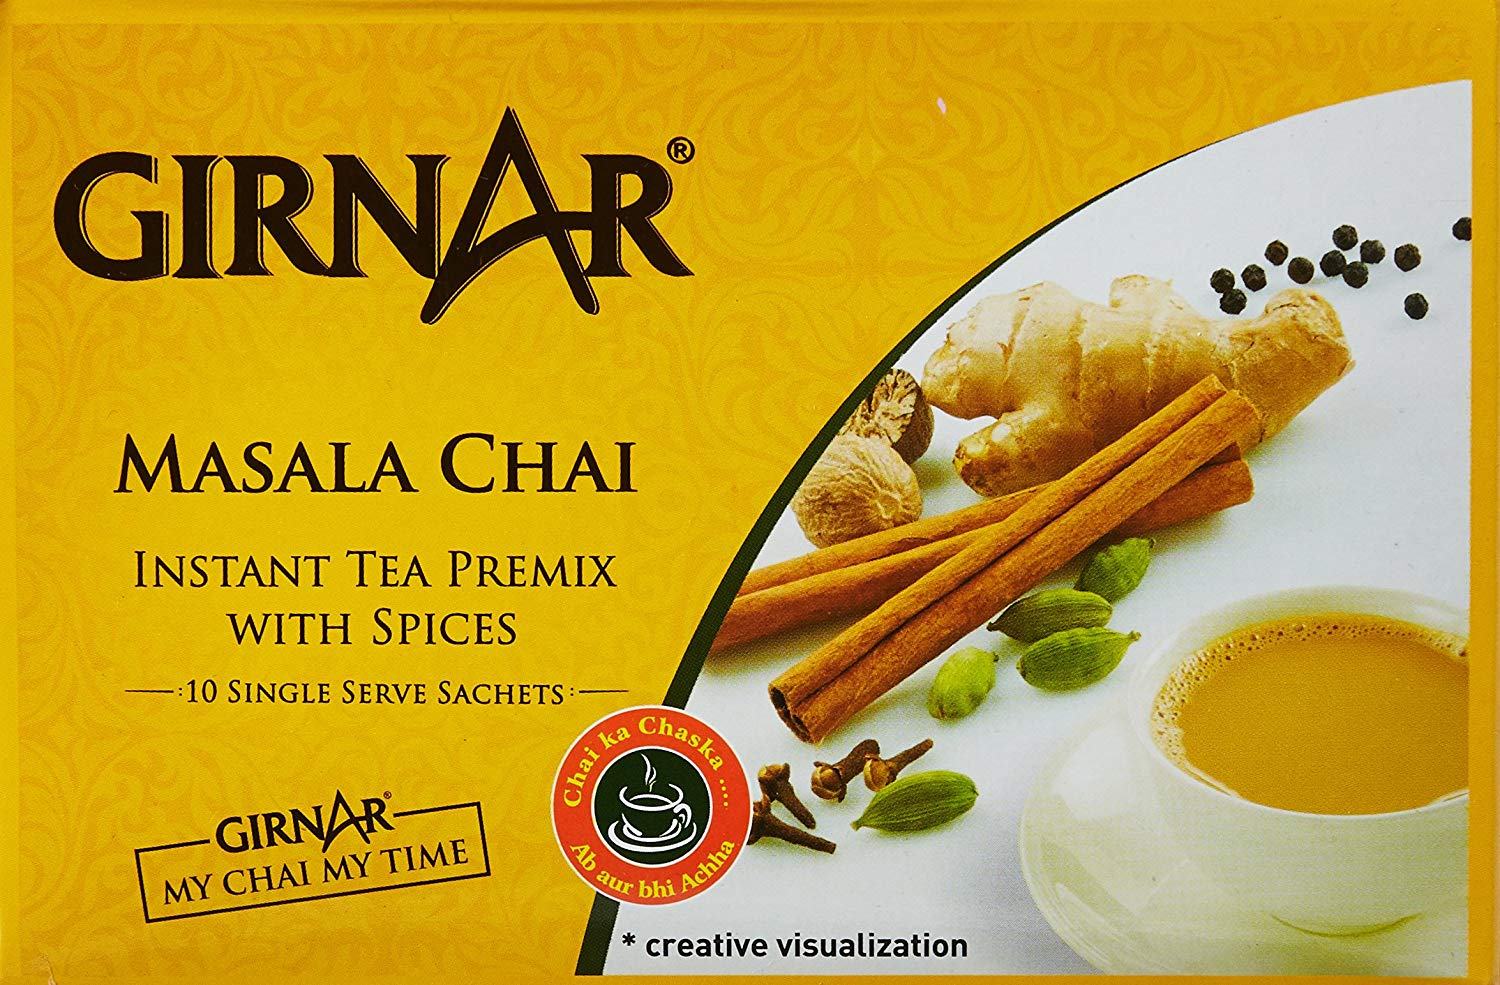 Girnar Masala Chai 140 g Instant Tea (Masala Chai)